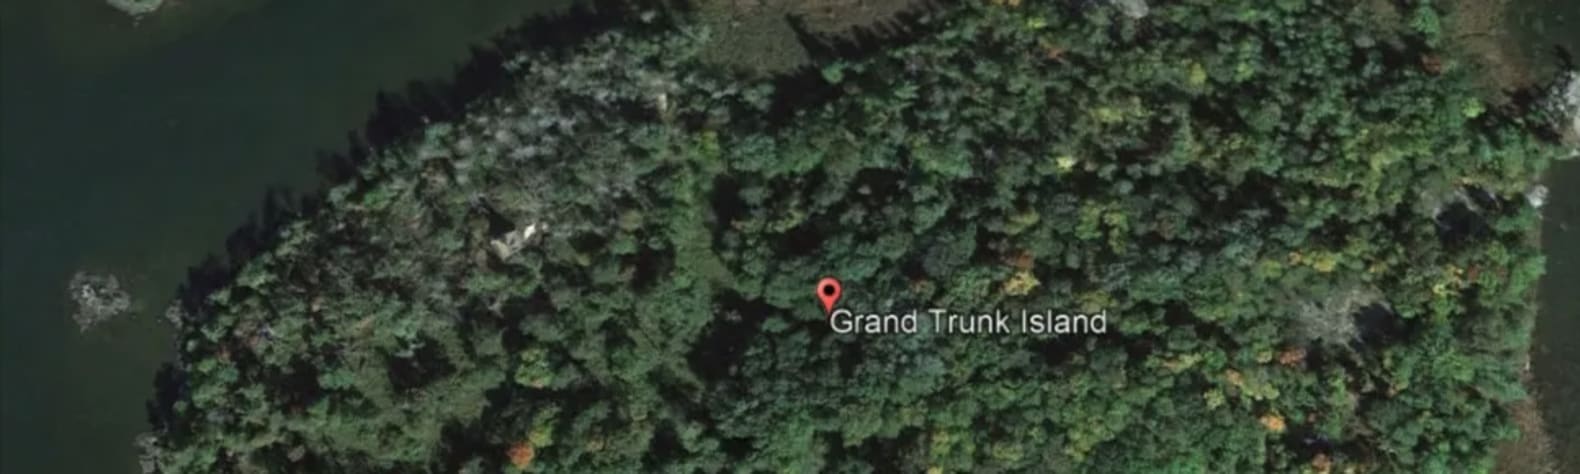 Grand Trunk Island Lake Camping